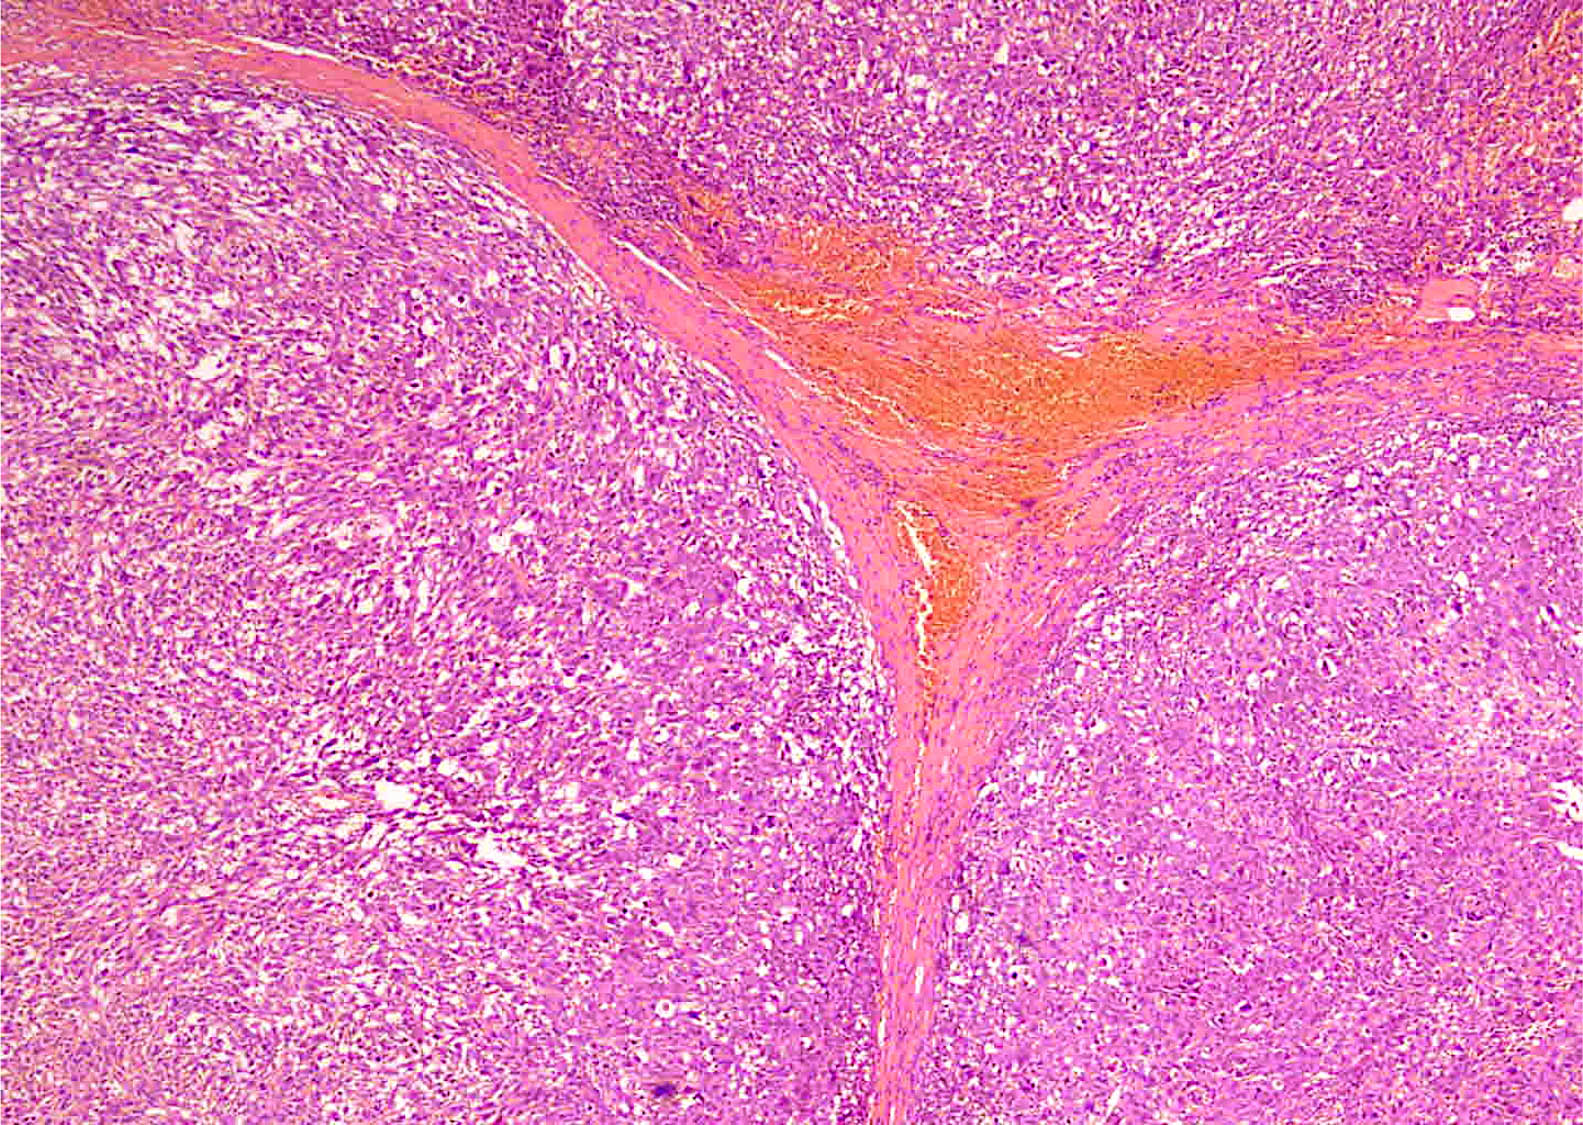 Lobulated cellular tumor